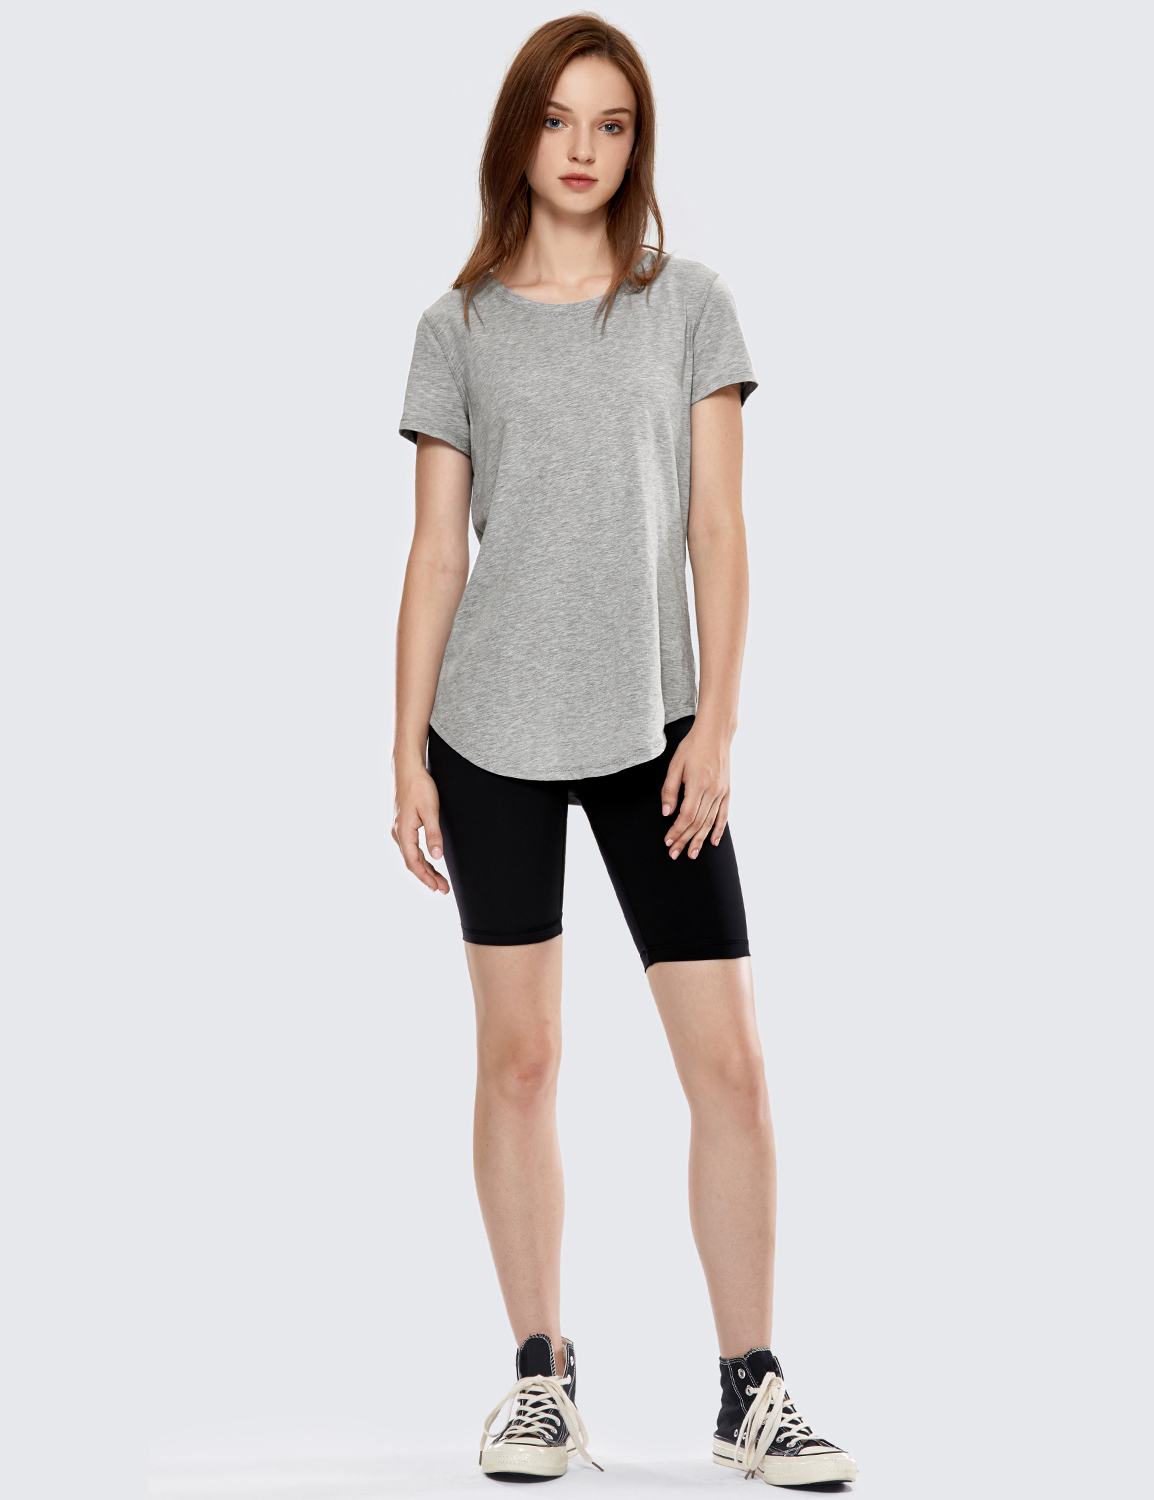 Crz Yoga Women Short Sleeve T Shirt Pima Cotton Workout Shirt Yoga Athletic Top Ebay 